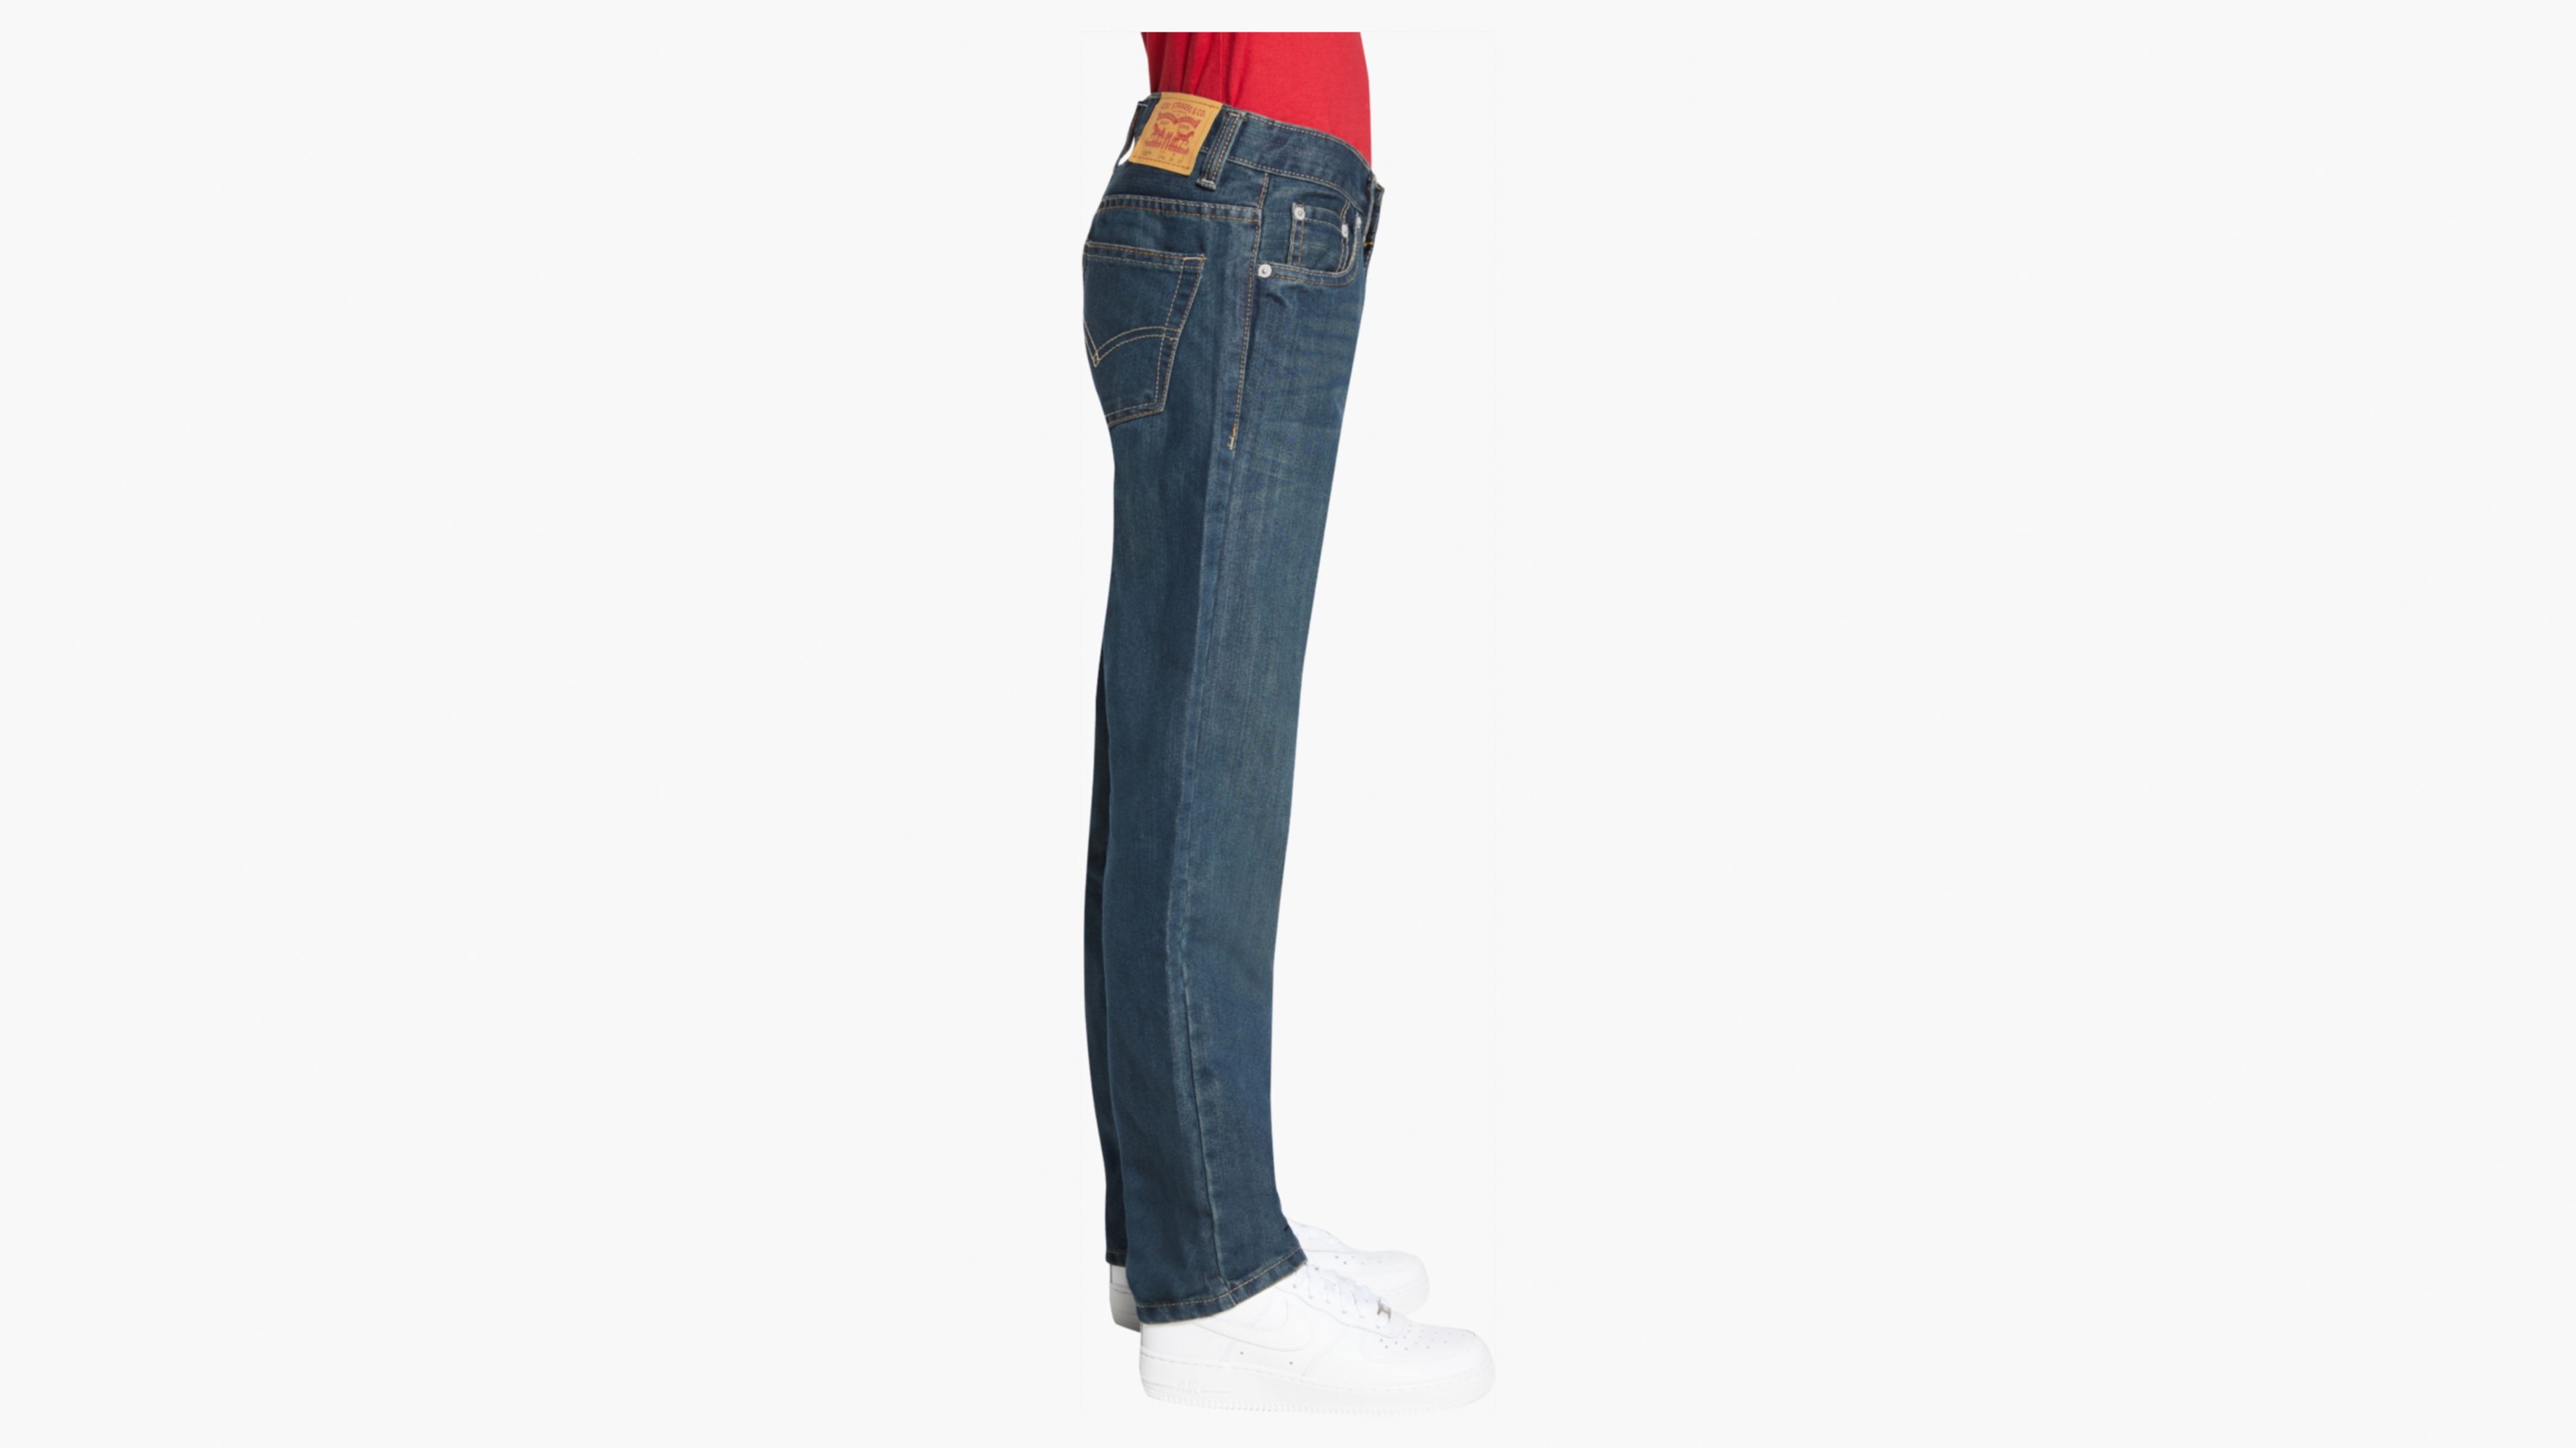 505™ Regular Fit Husky Big Boys Jeans 8-20 - Medium Wash | Levi's® US